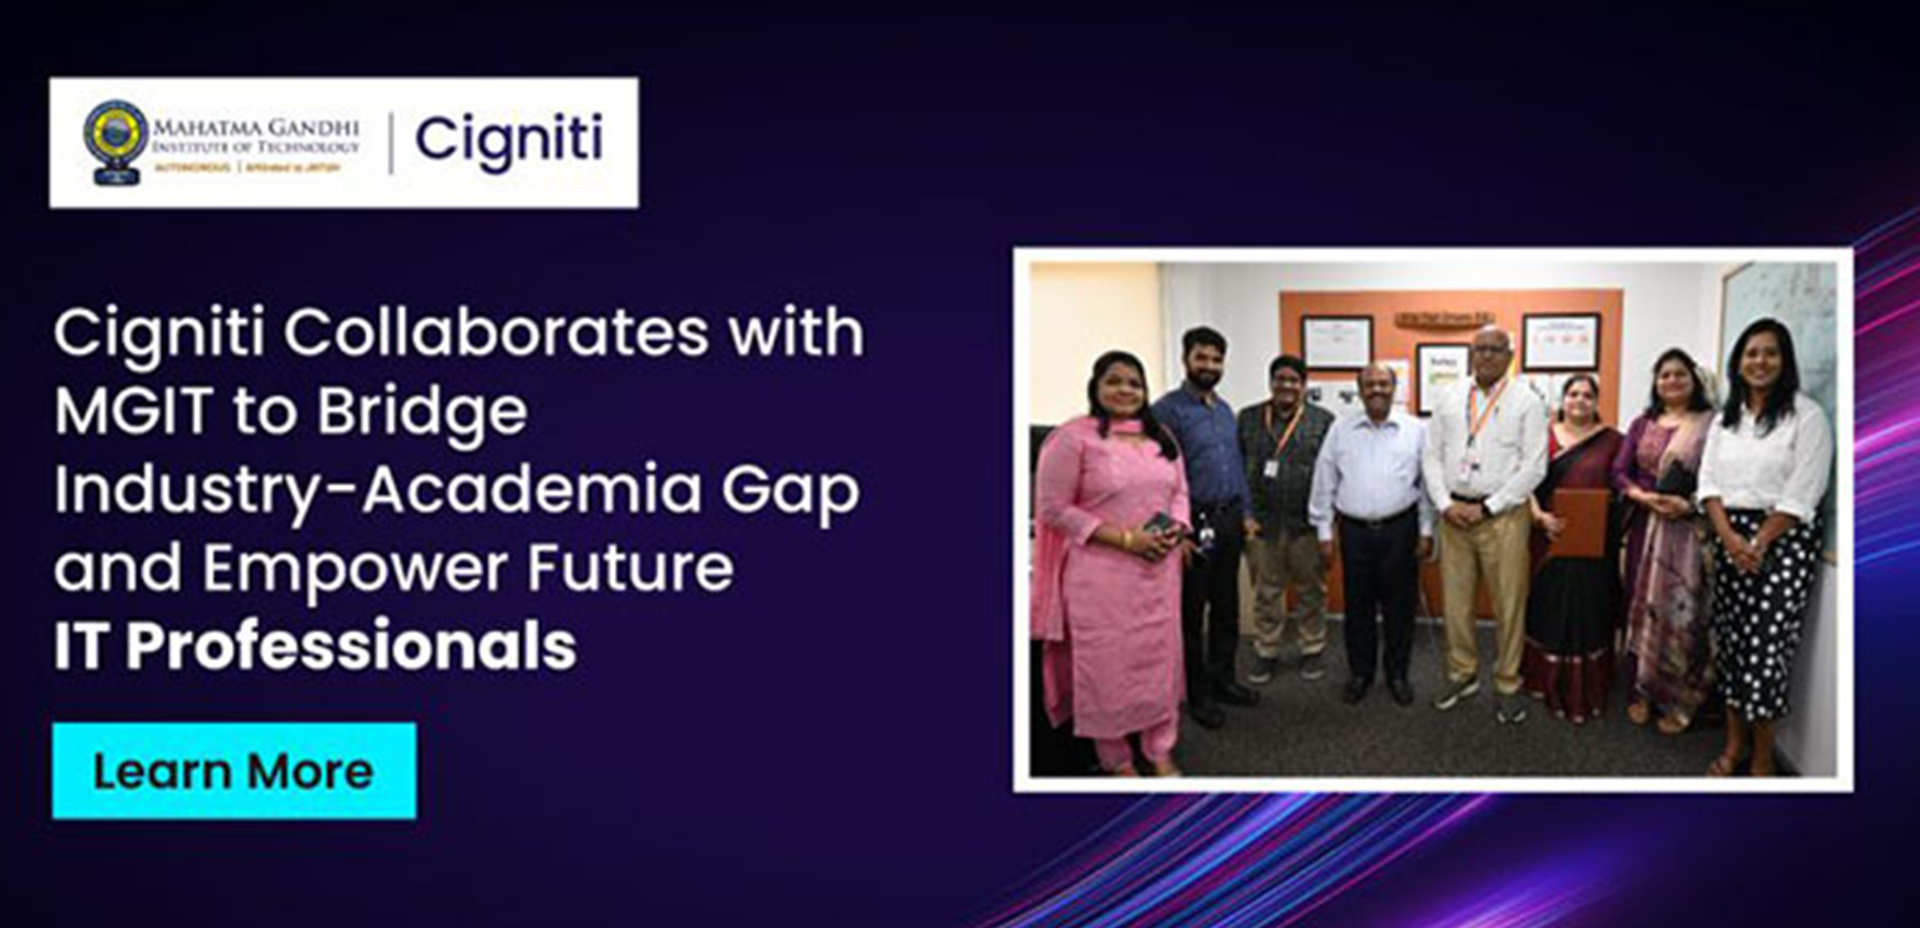 Cigniti and Mahatma Gandhi Institute of Technology Collaborate to Bridge Industry-Academia Gap